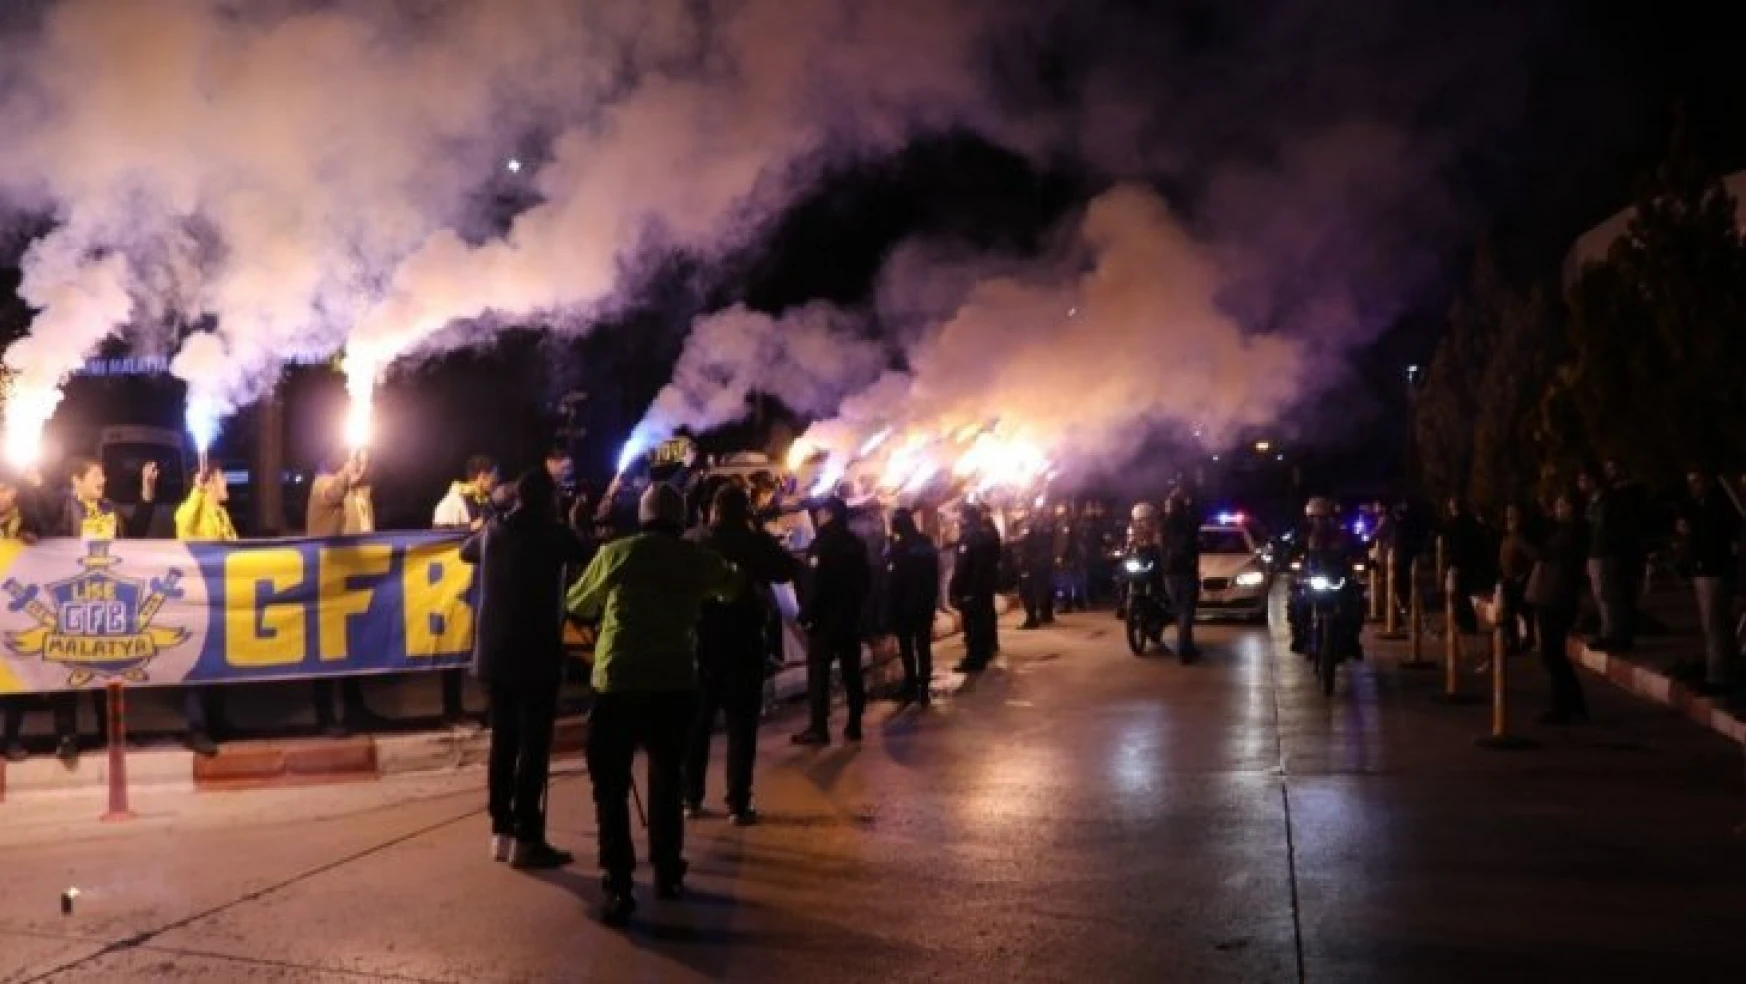 Fenerbahçe'ye Malatya'da coşkulu karşılama